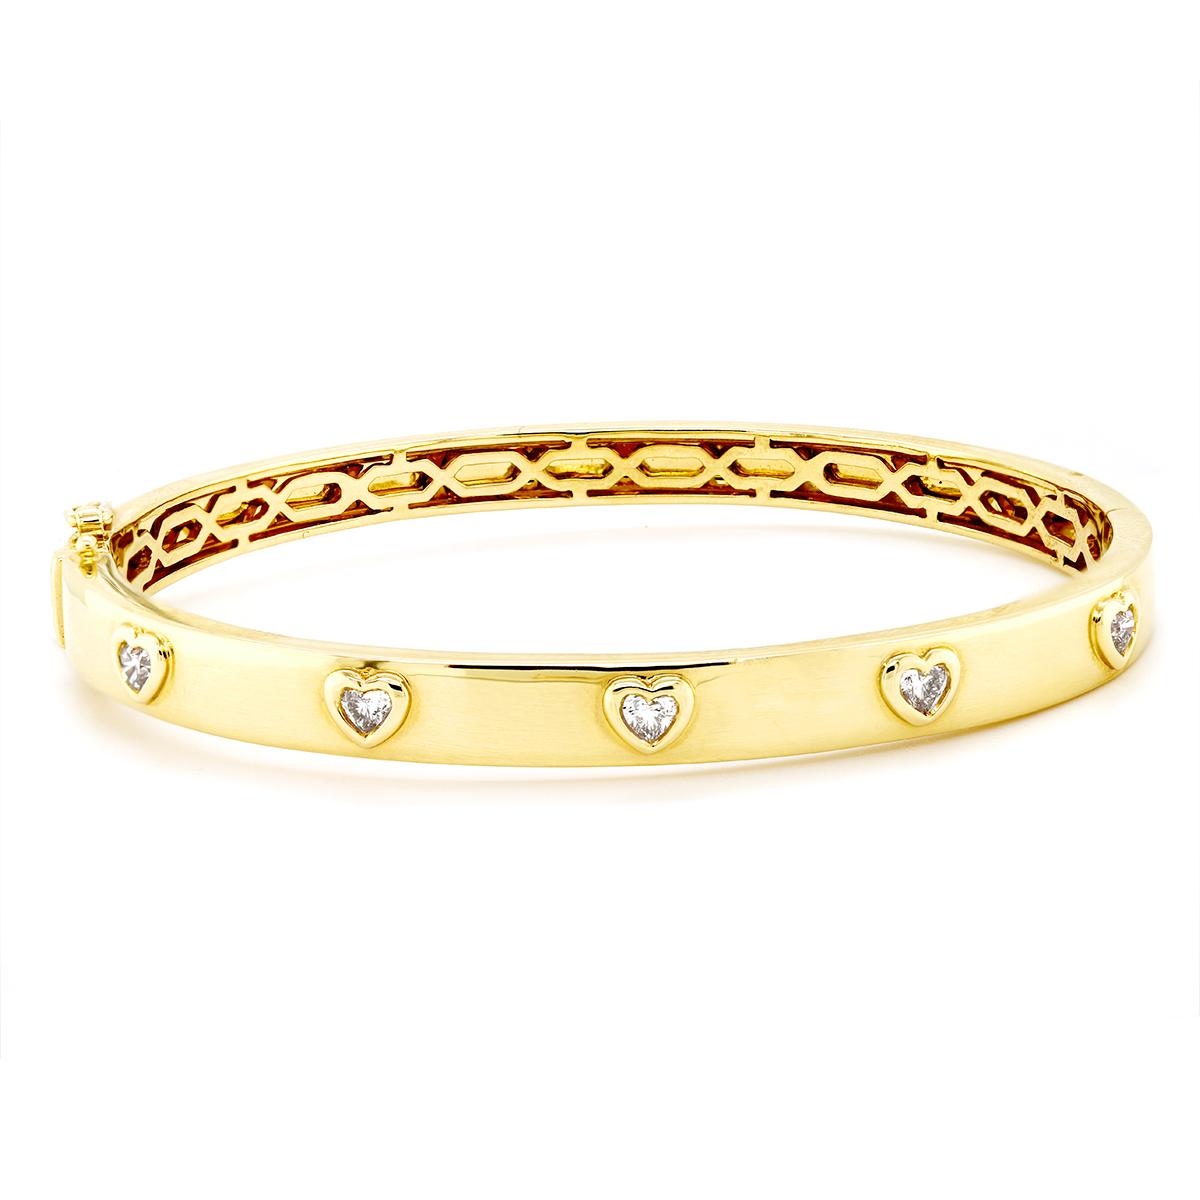 YELLOW GOLD DIAMOND BANGLE BRACELET WITH CHAIN LINK DESIGN, .55 CT